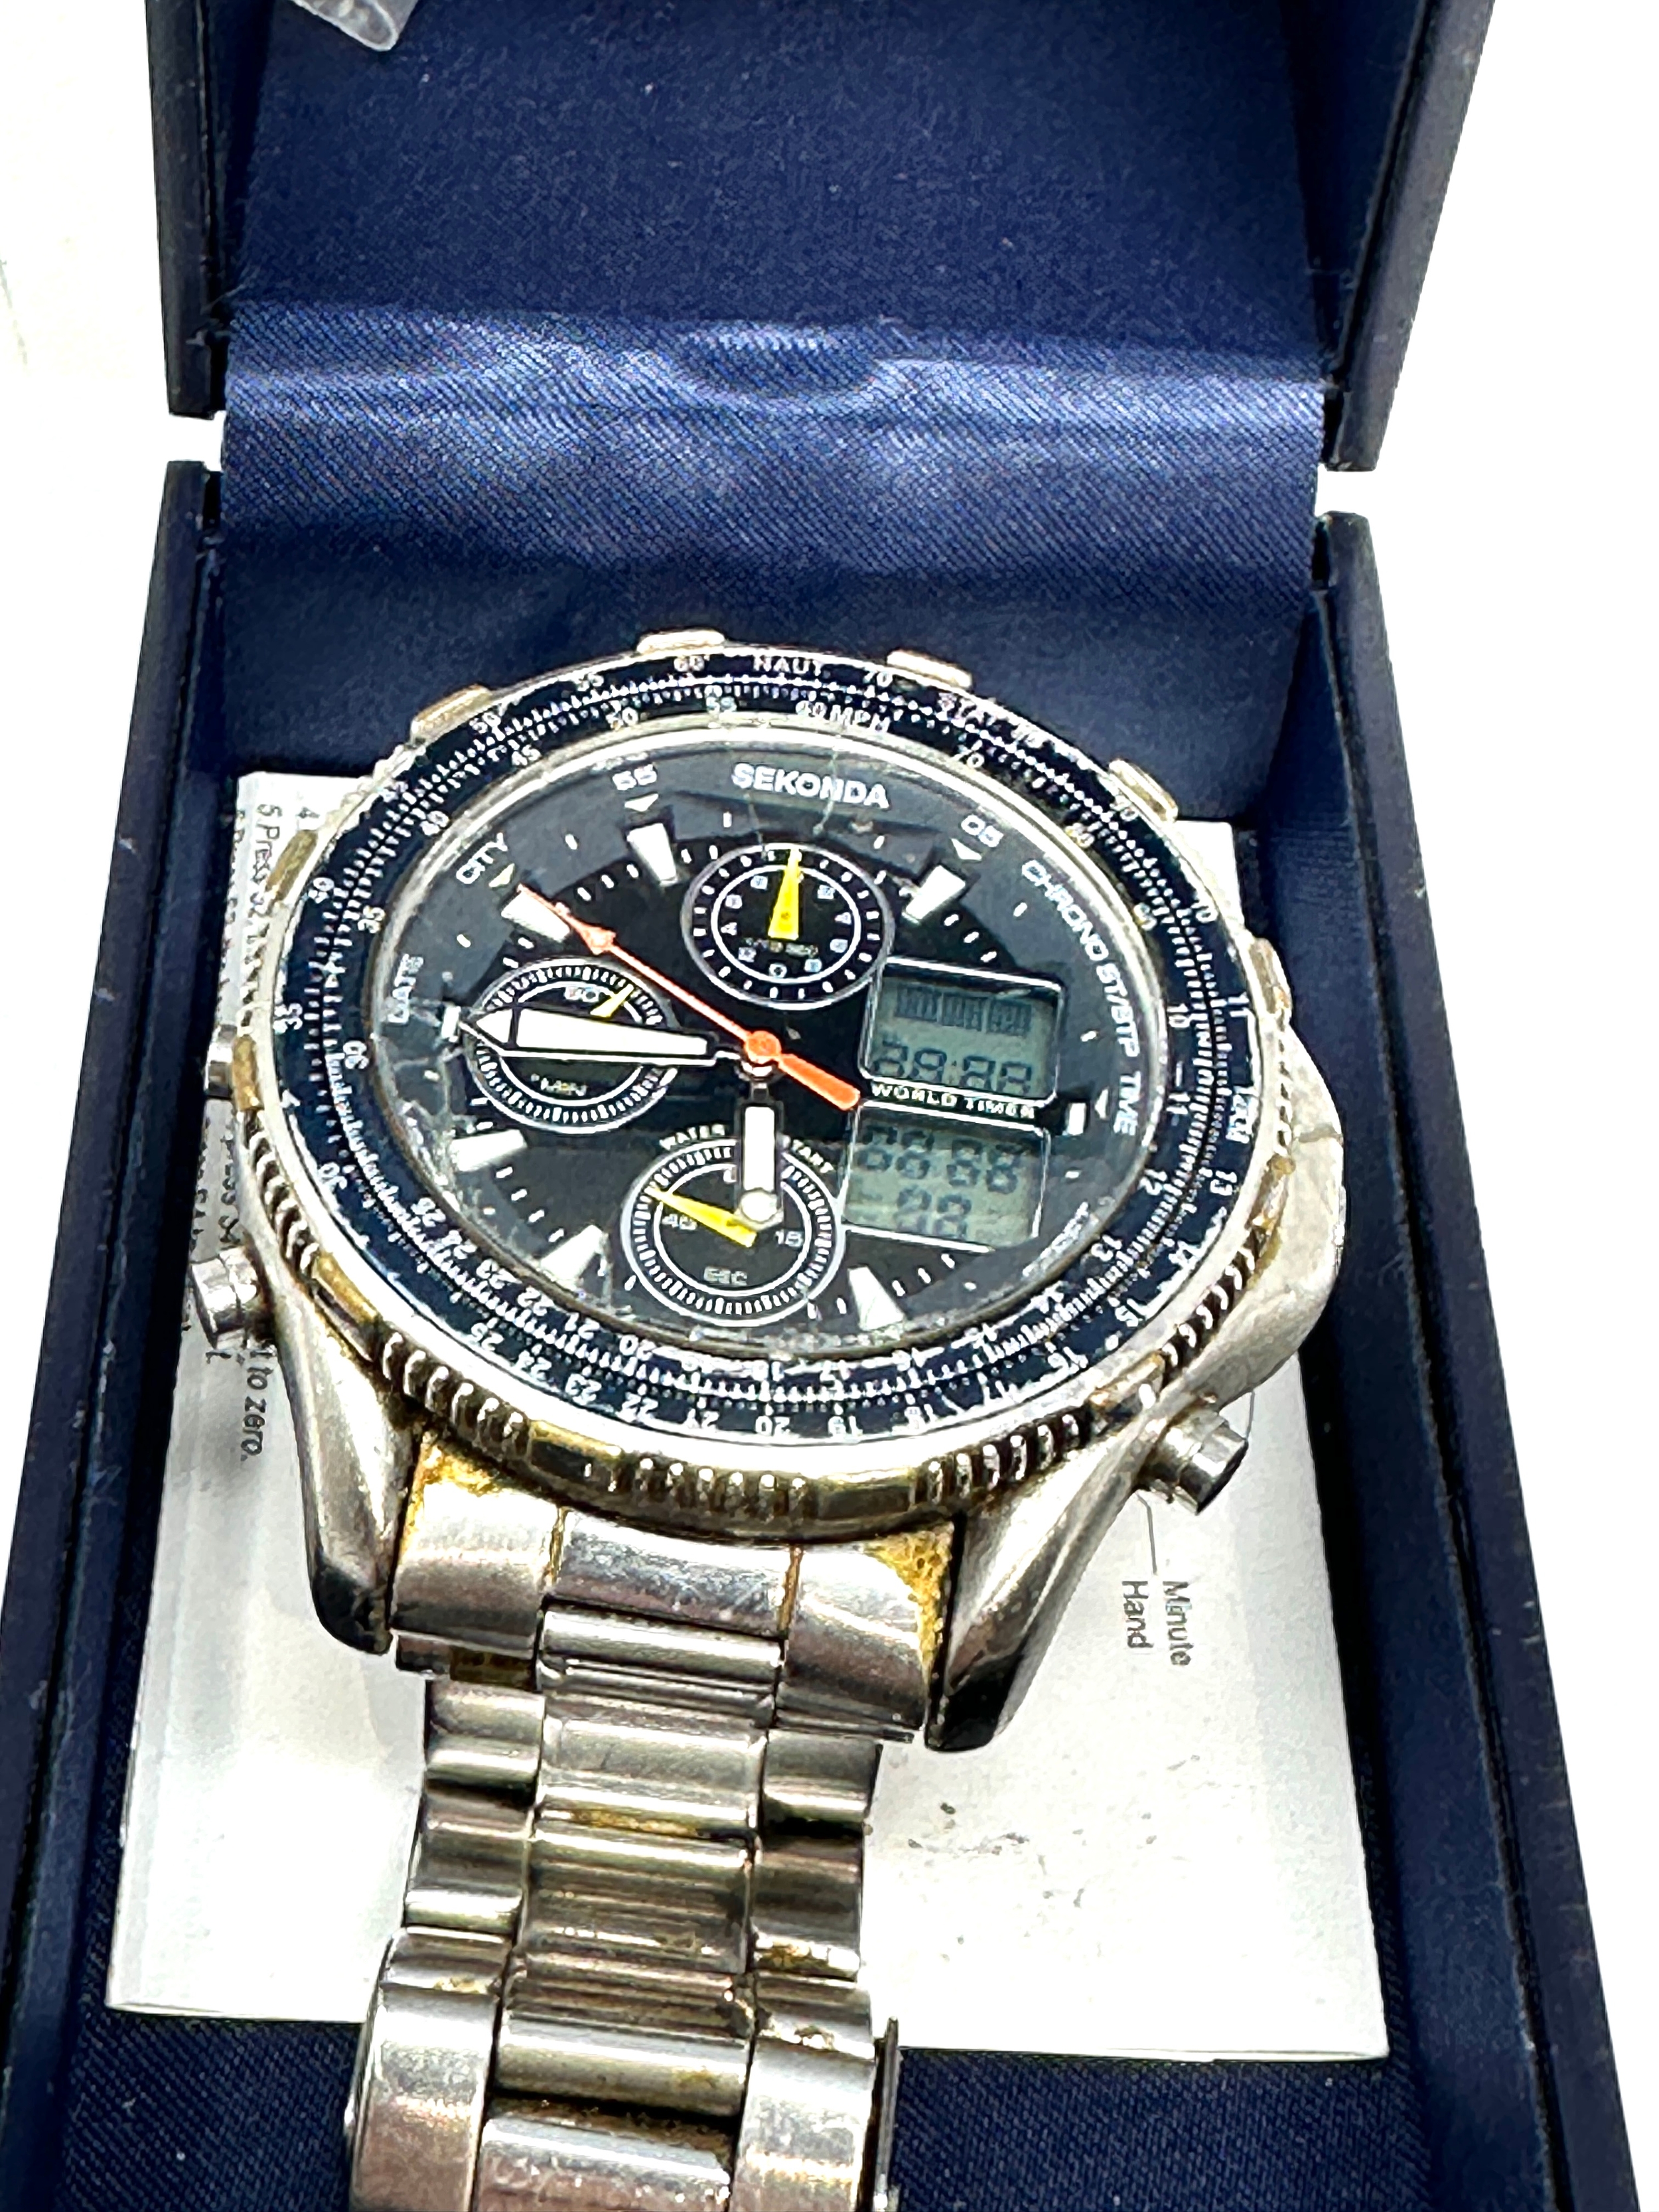 selection of quartz chronograph etc wristwatches inc sekonda auriol ralph klien etc prob need new - Image 4 of 4